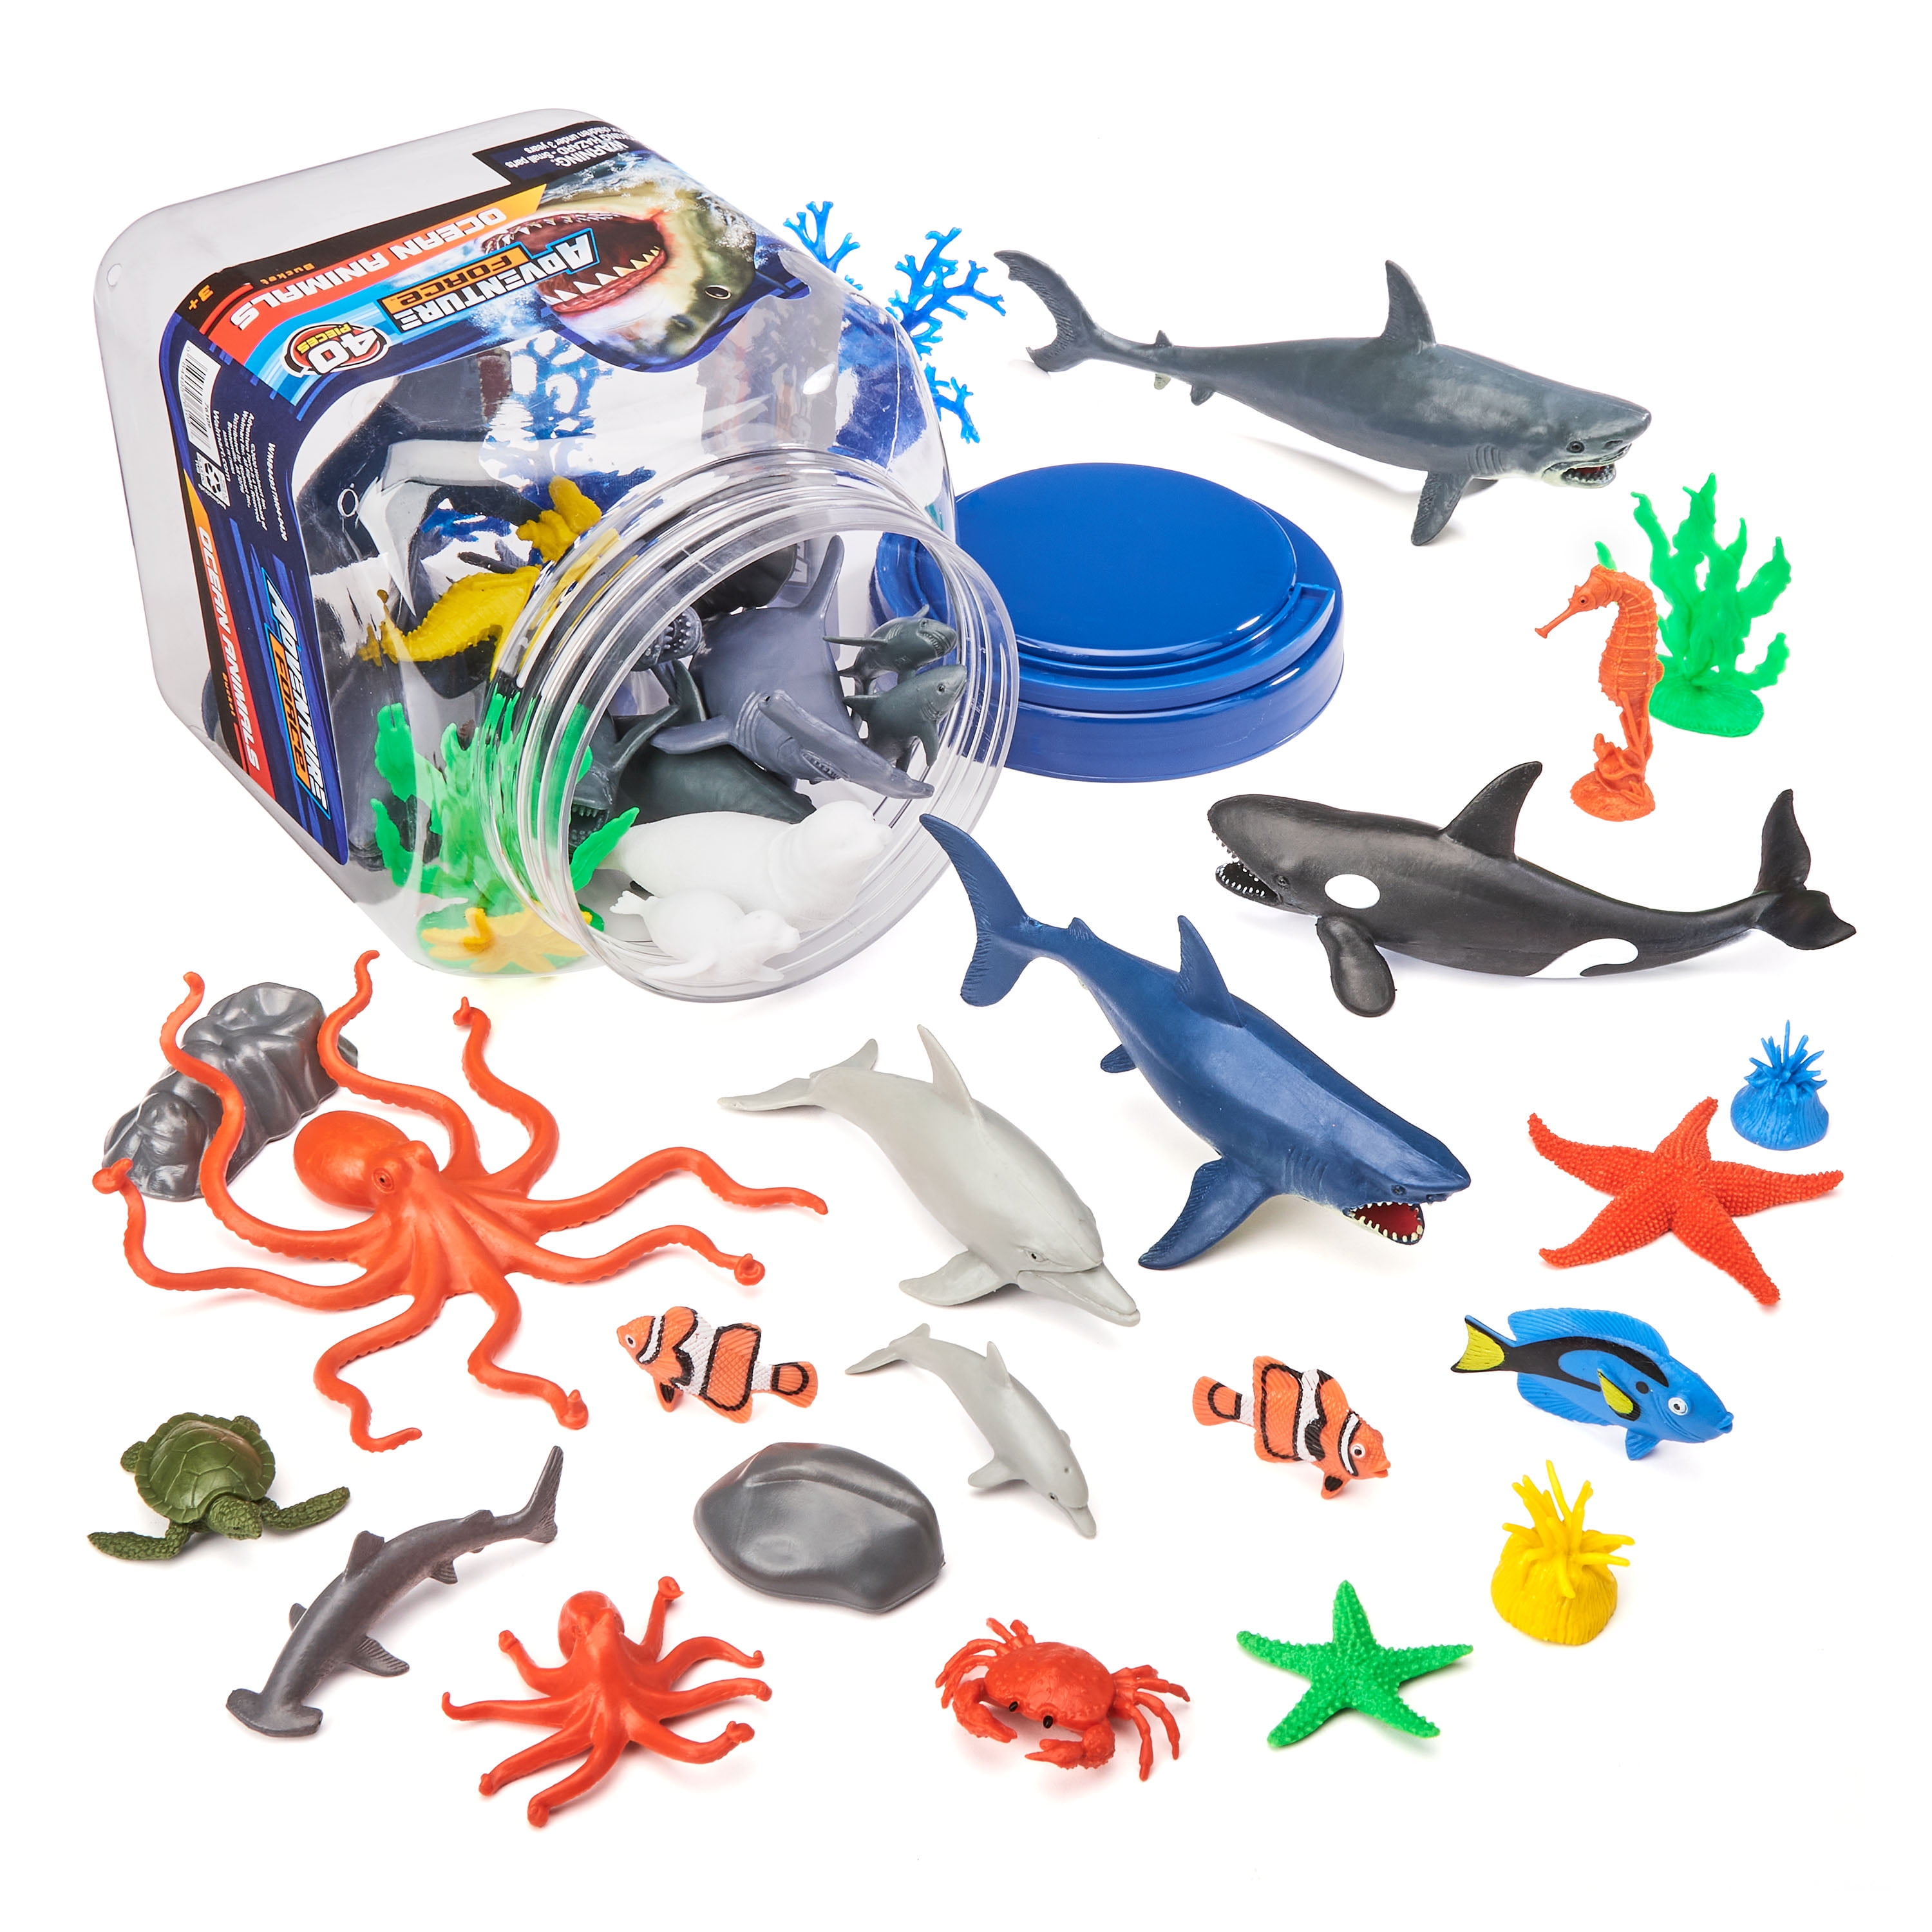 Adventure Force 40-Piece Jumbo Bucket Play Set, Ocean Animals 